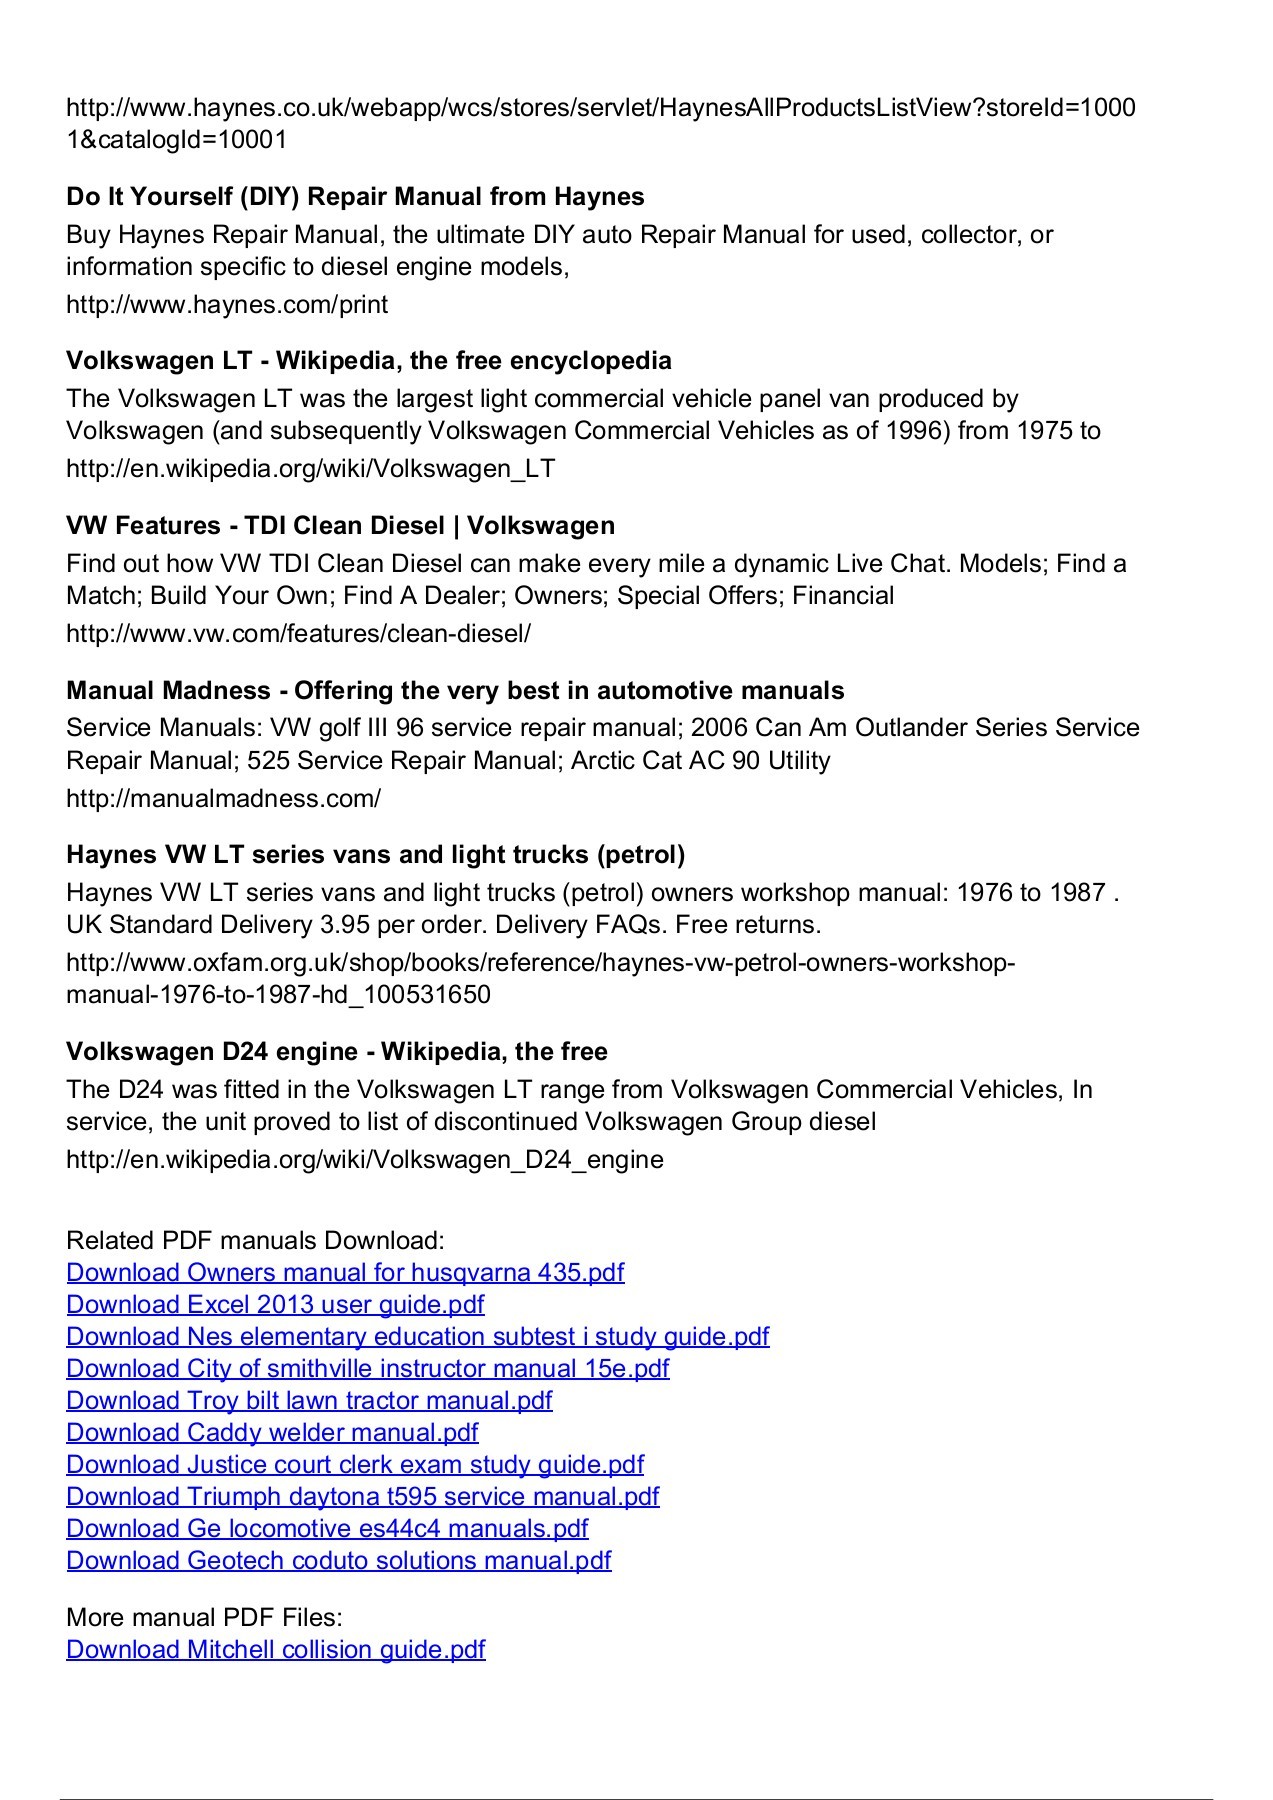 2003 volkswagen beetle owners manual free download